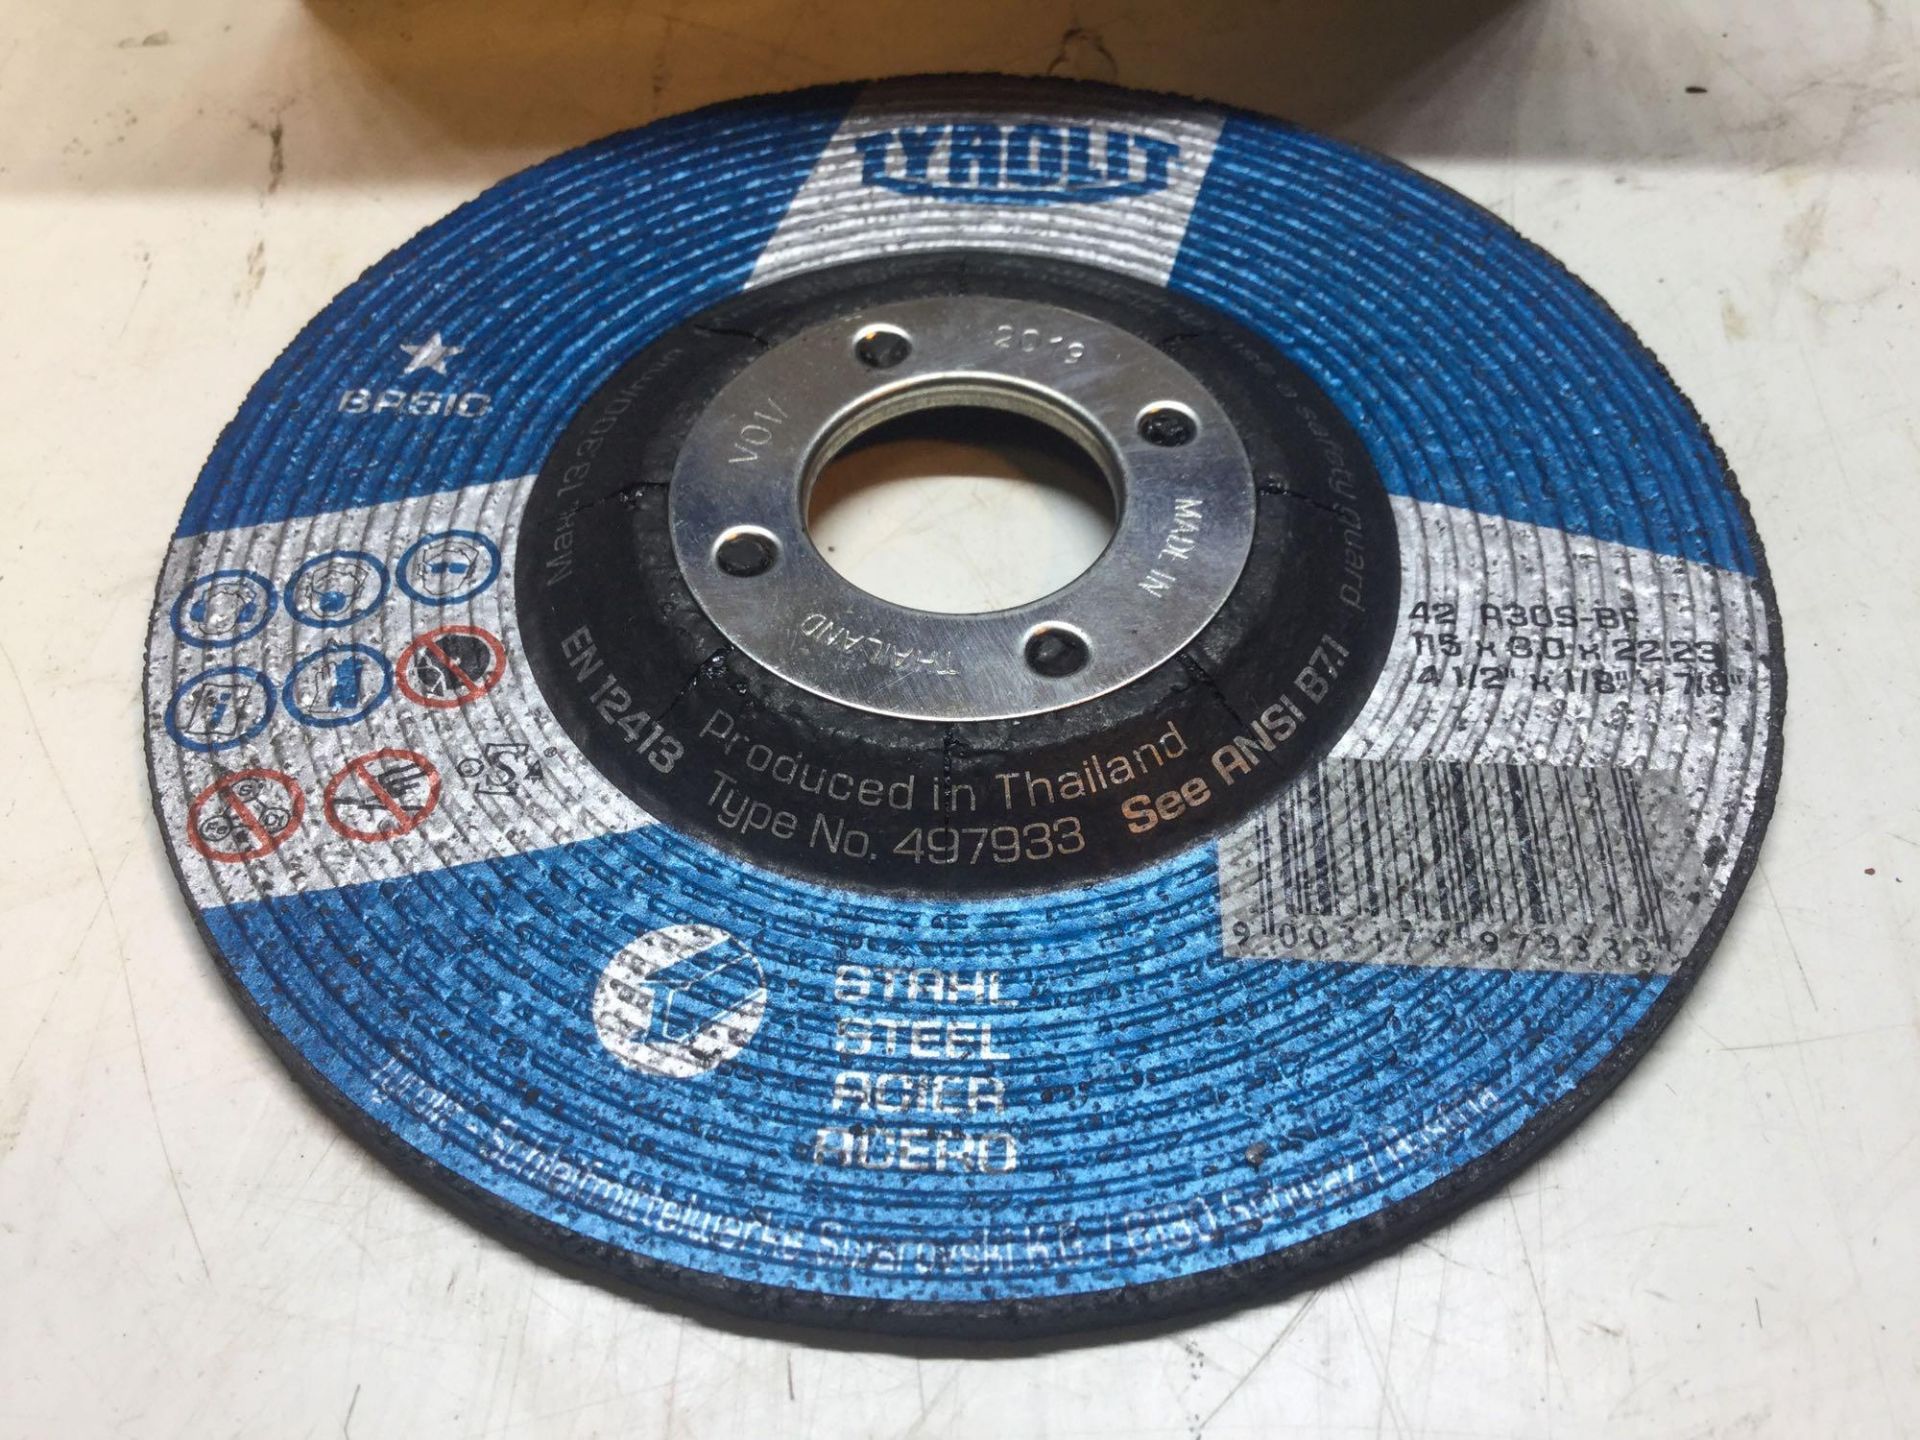 Tyrolit 115mm Cut Off Discs - Image 3 of 3